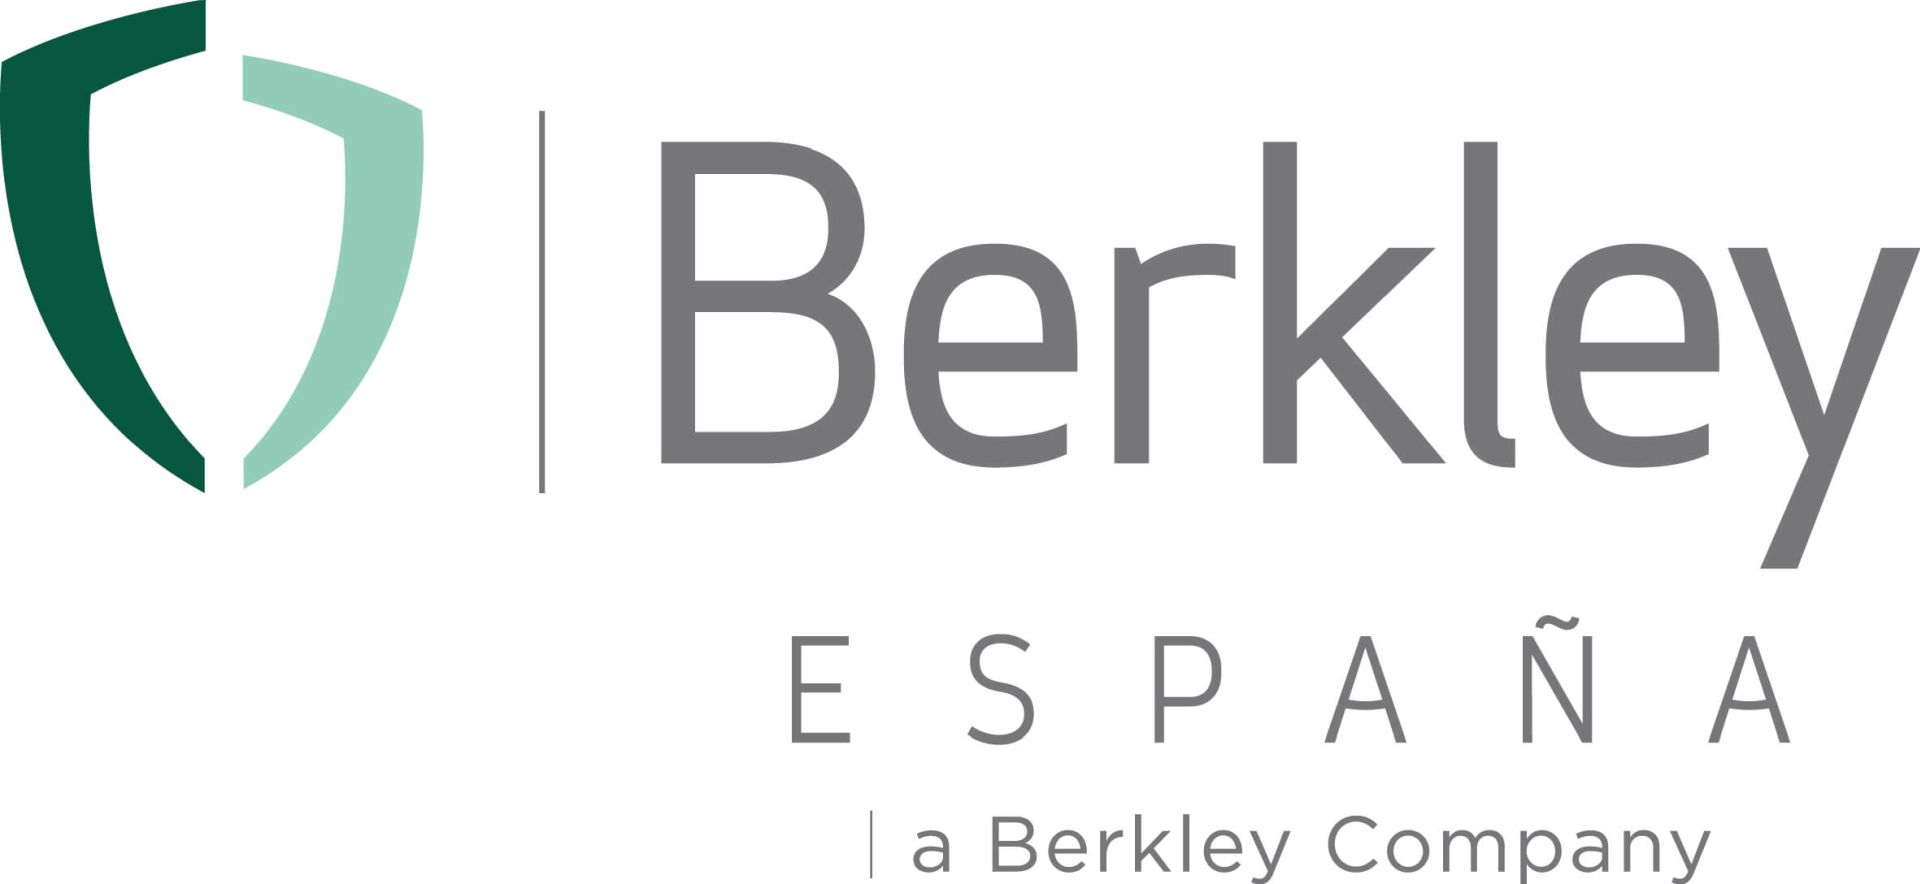 Berkley_Logo_Berkley España